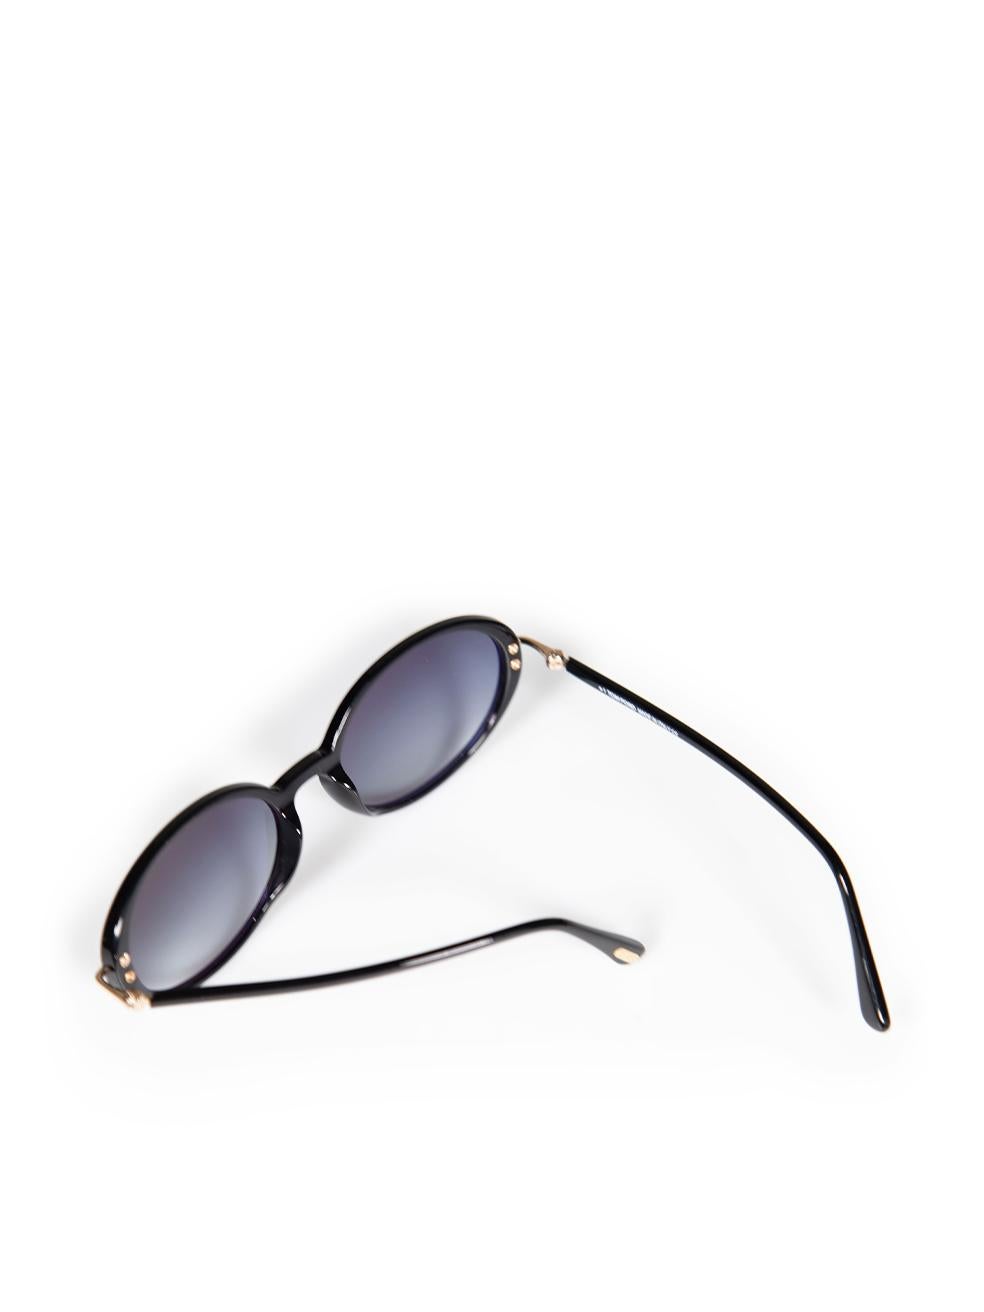 Tom Ford Shiny Black Raquel Oval Sunglasses For Sale 3